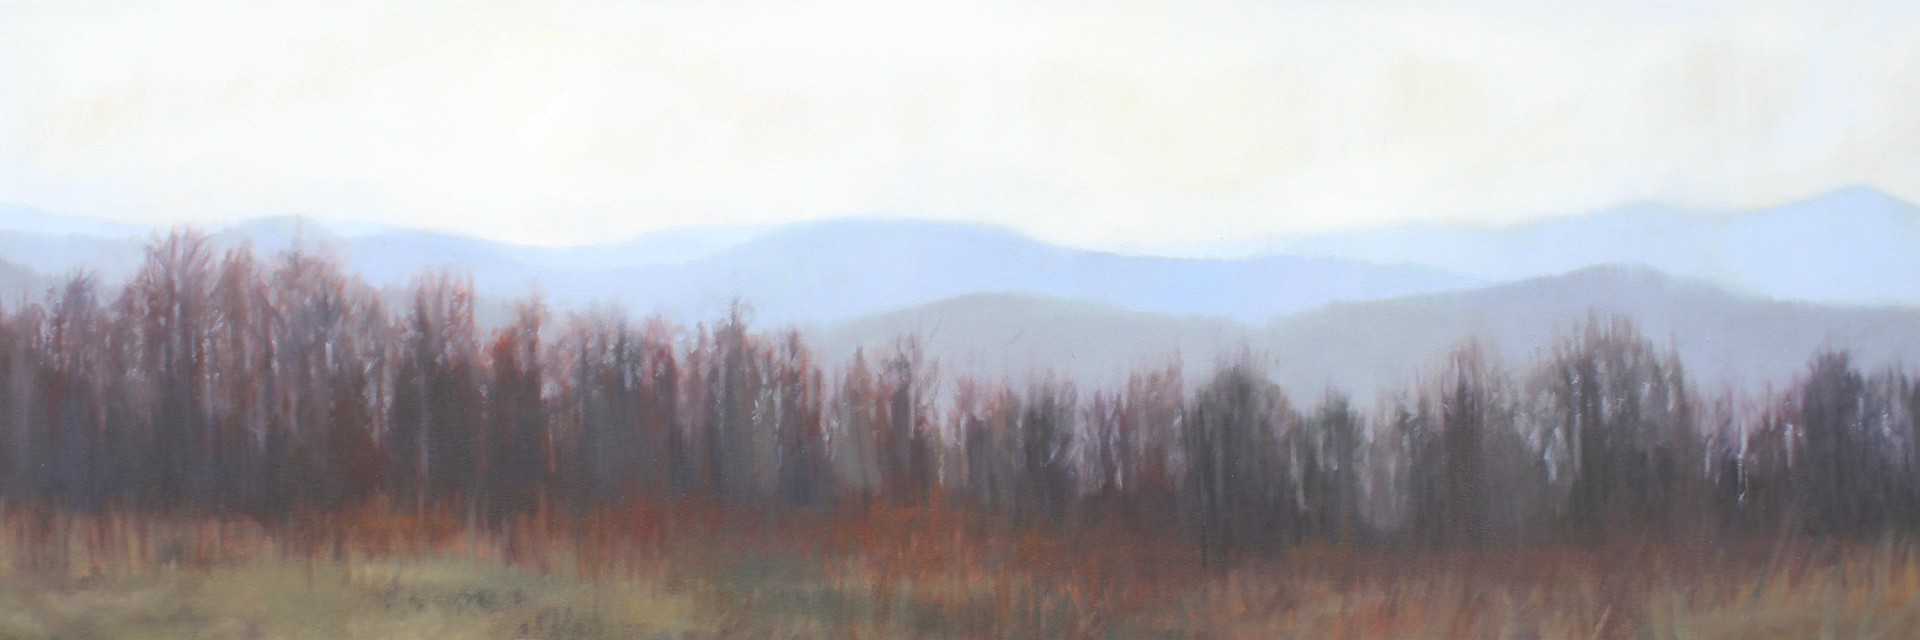 Winter Mountains by Megan Lightell